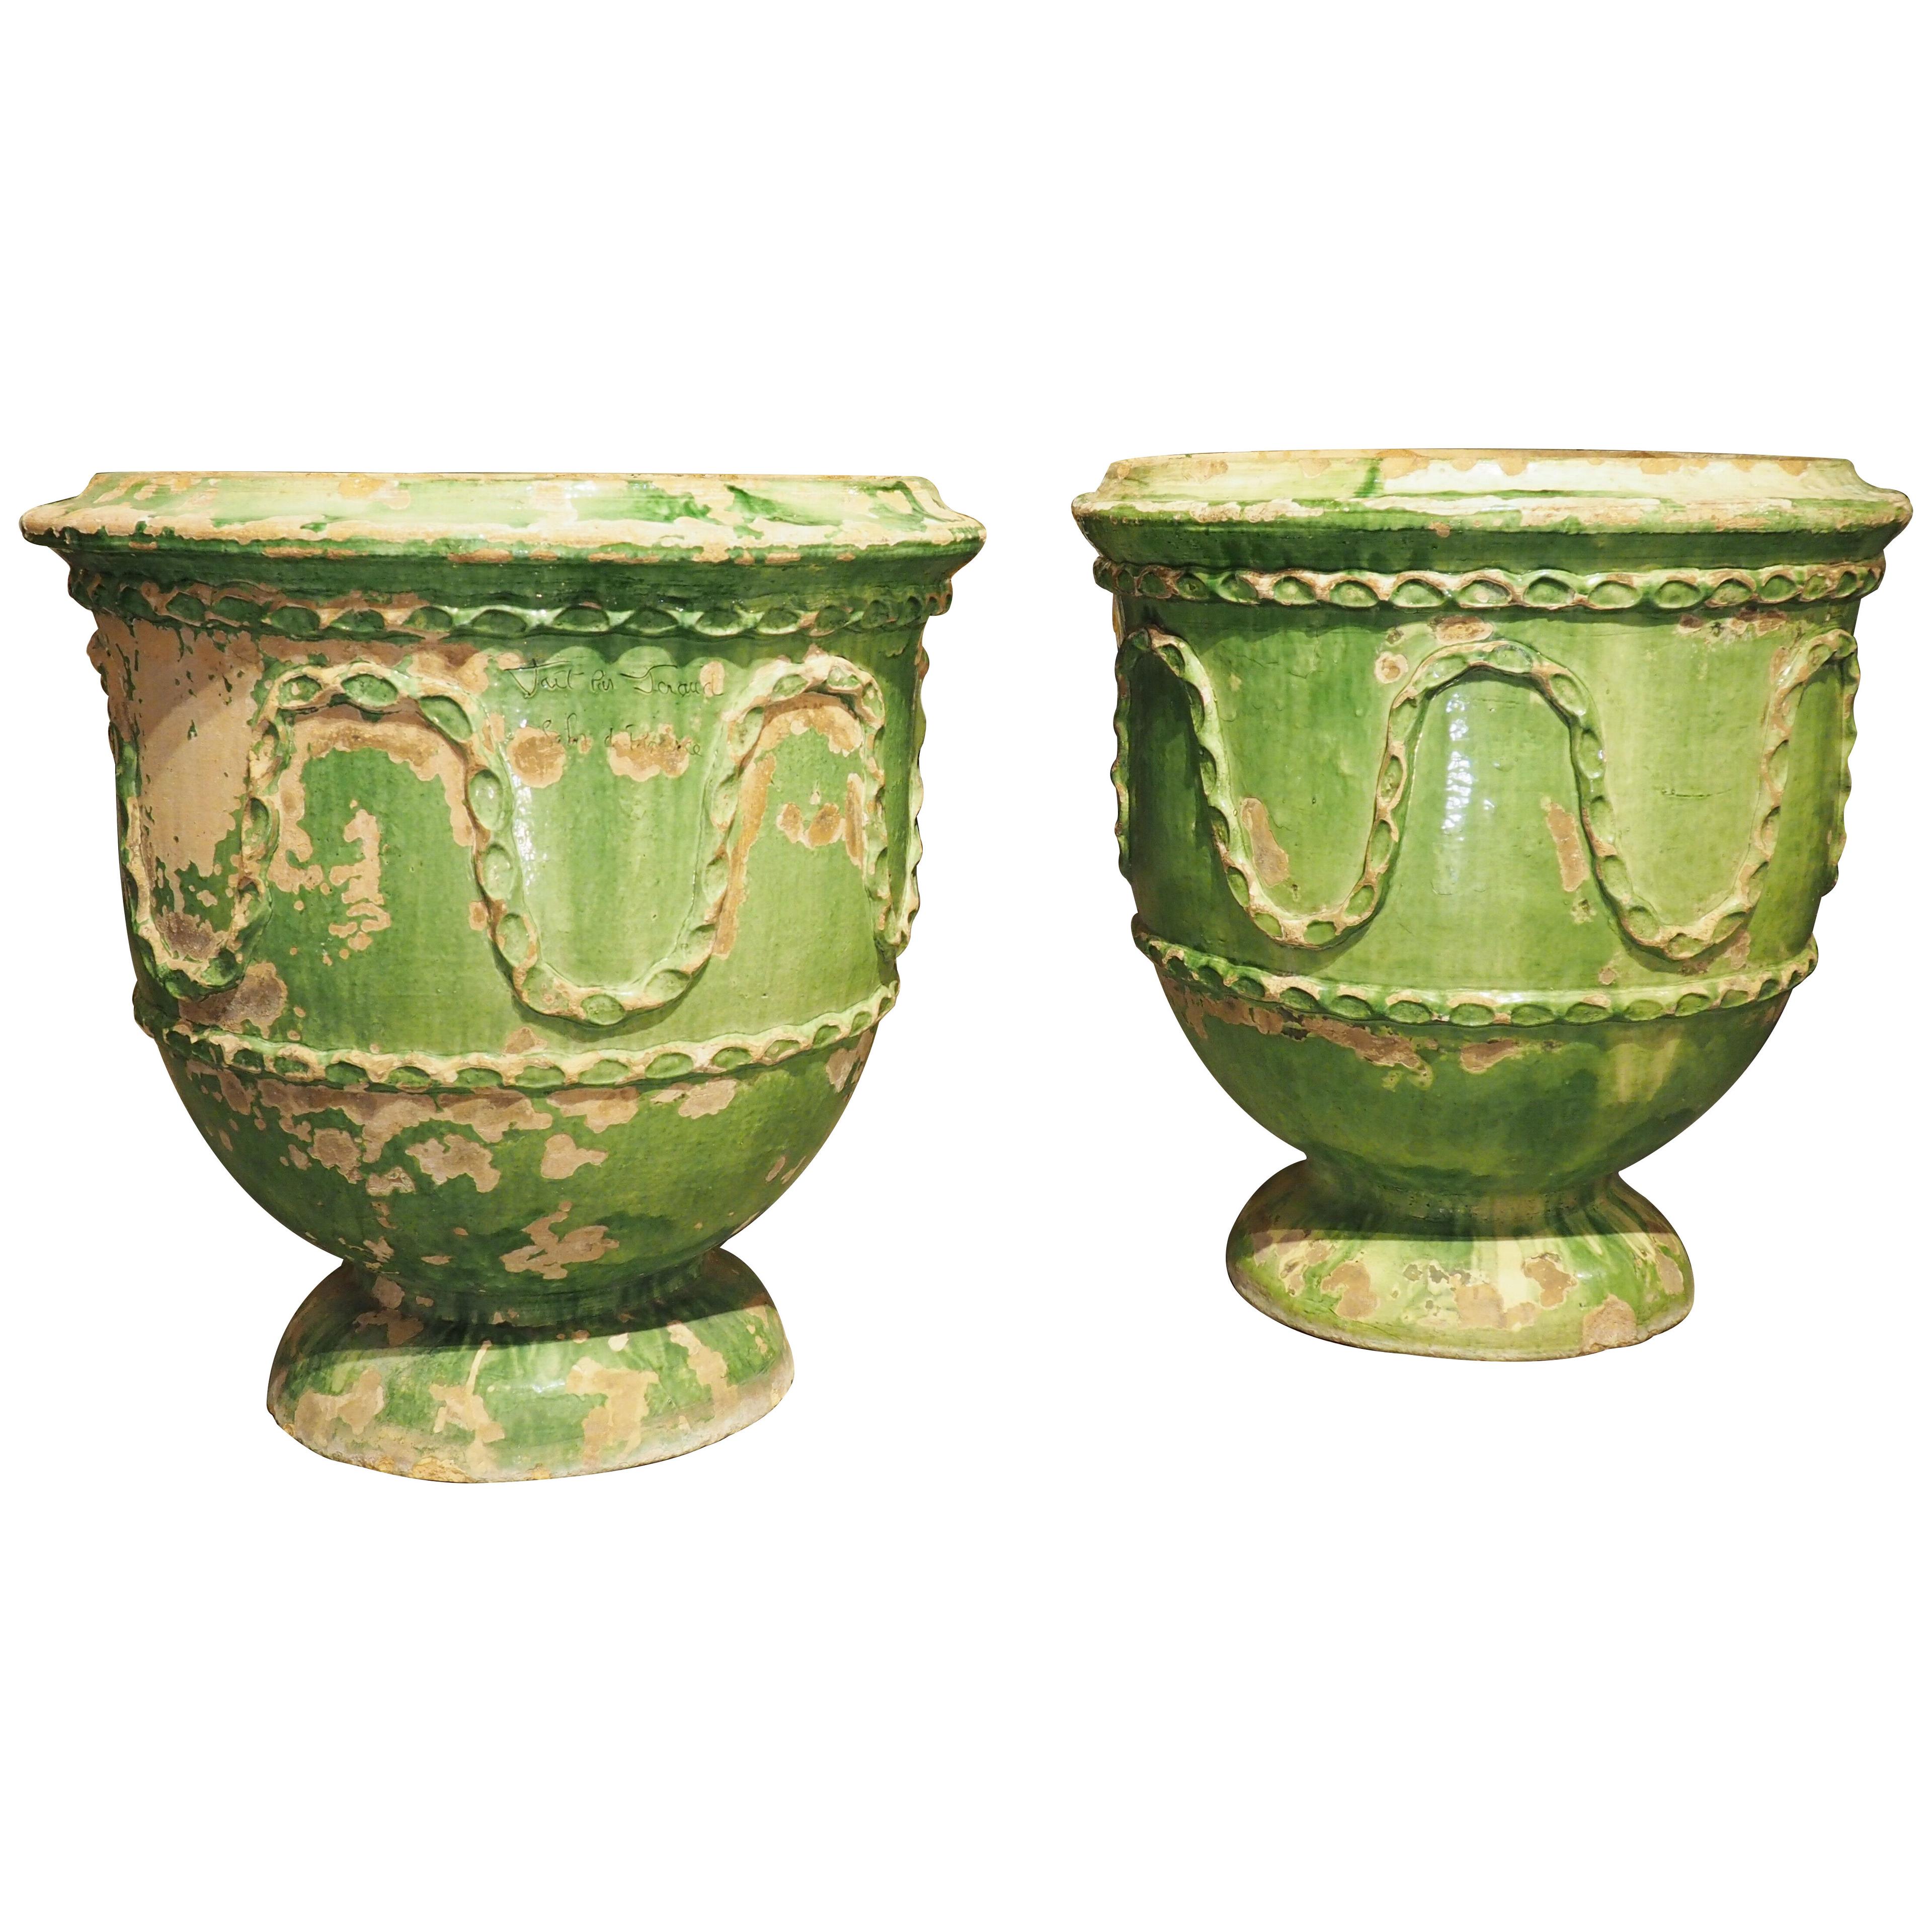 Pair of Antique Green Glazed Terra Cotta Pots, Salon-de-Provence, France, 19th C